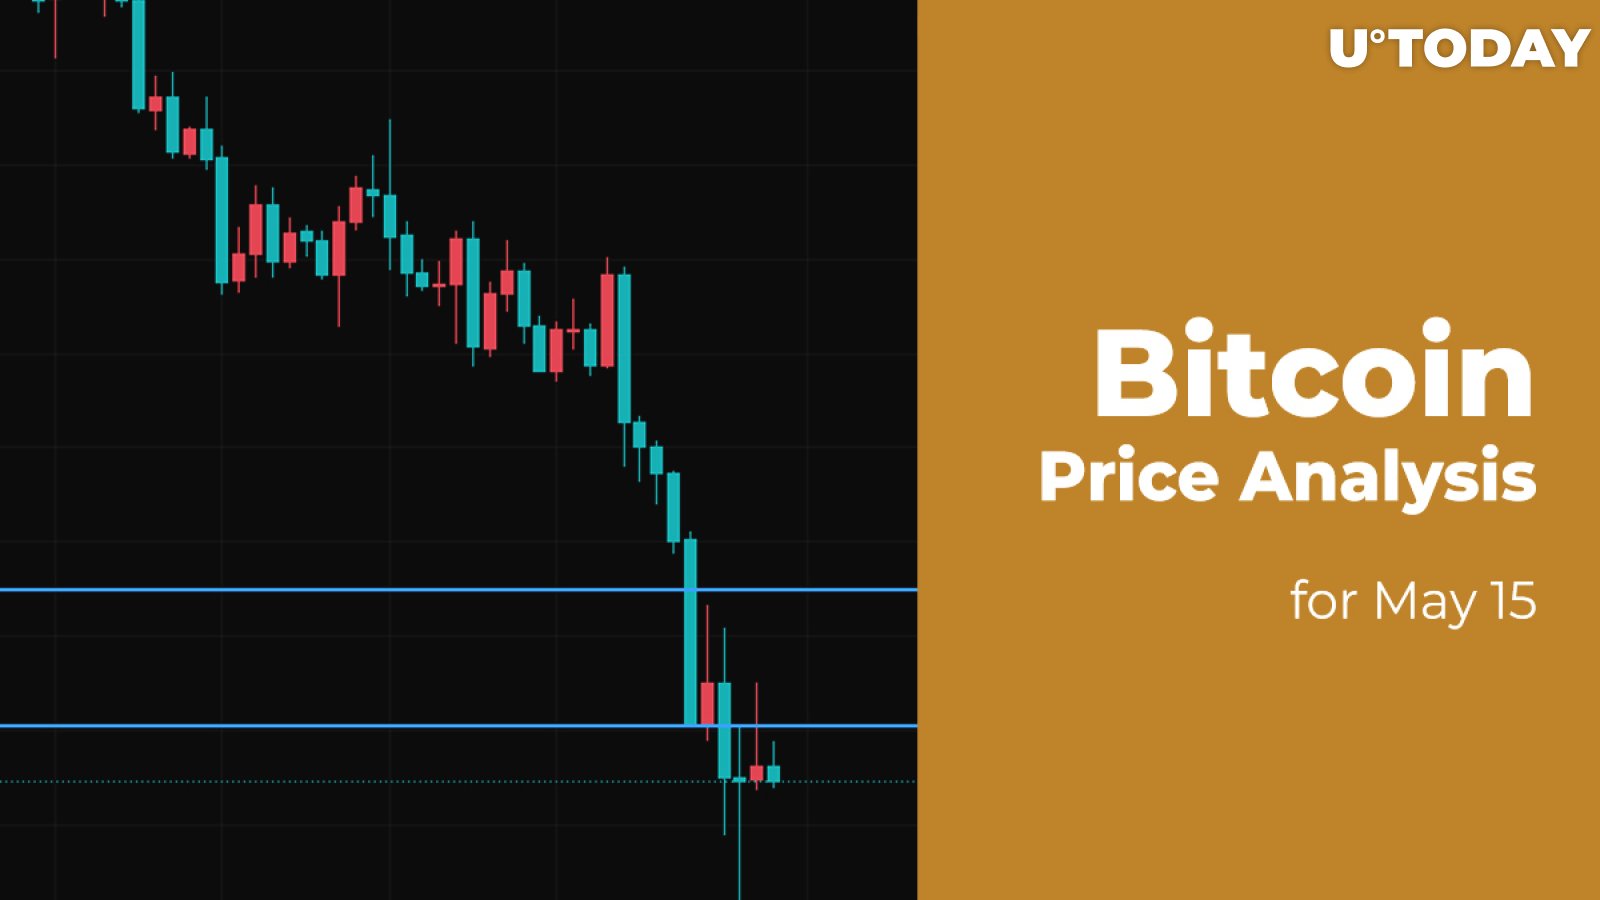 Bitcoin (BTC) Price Analysis for May 15